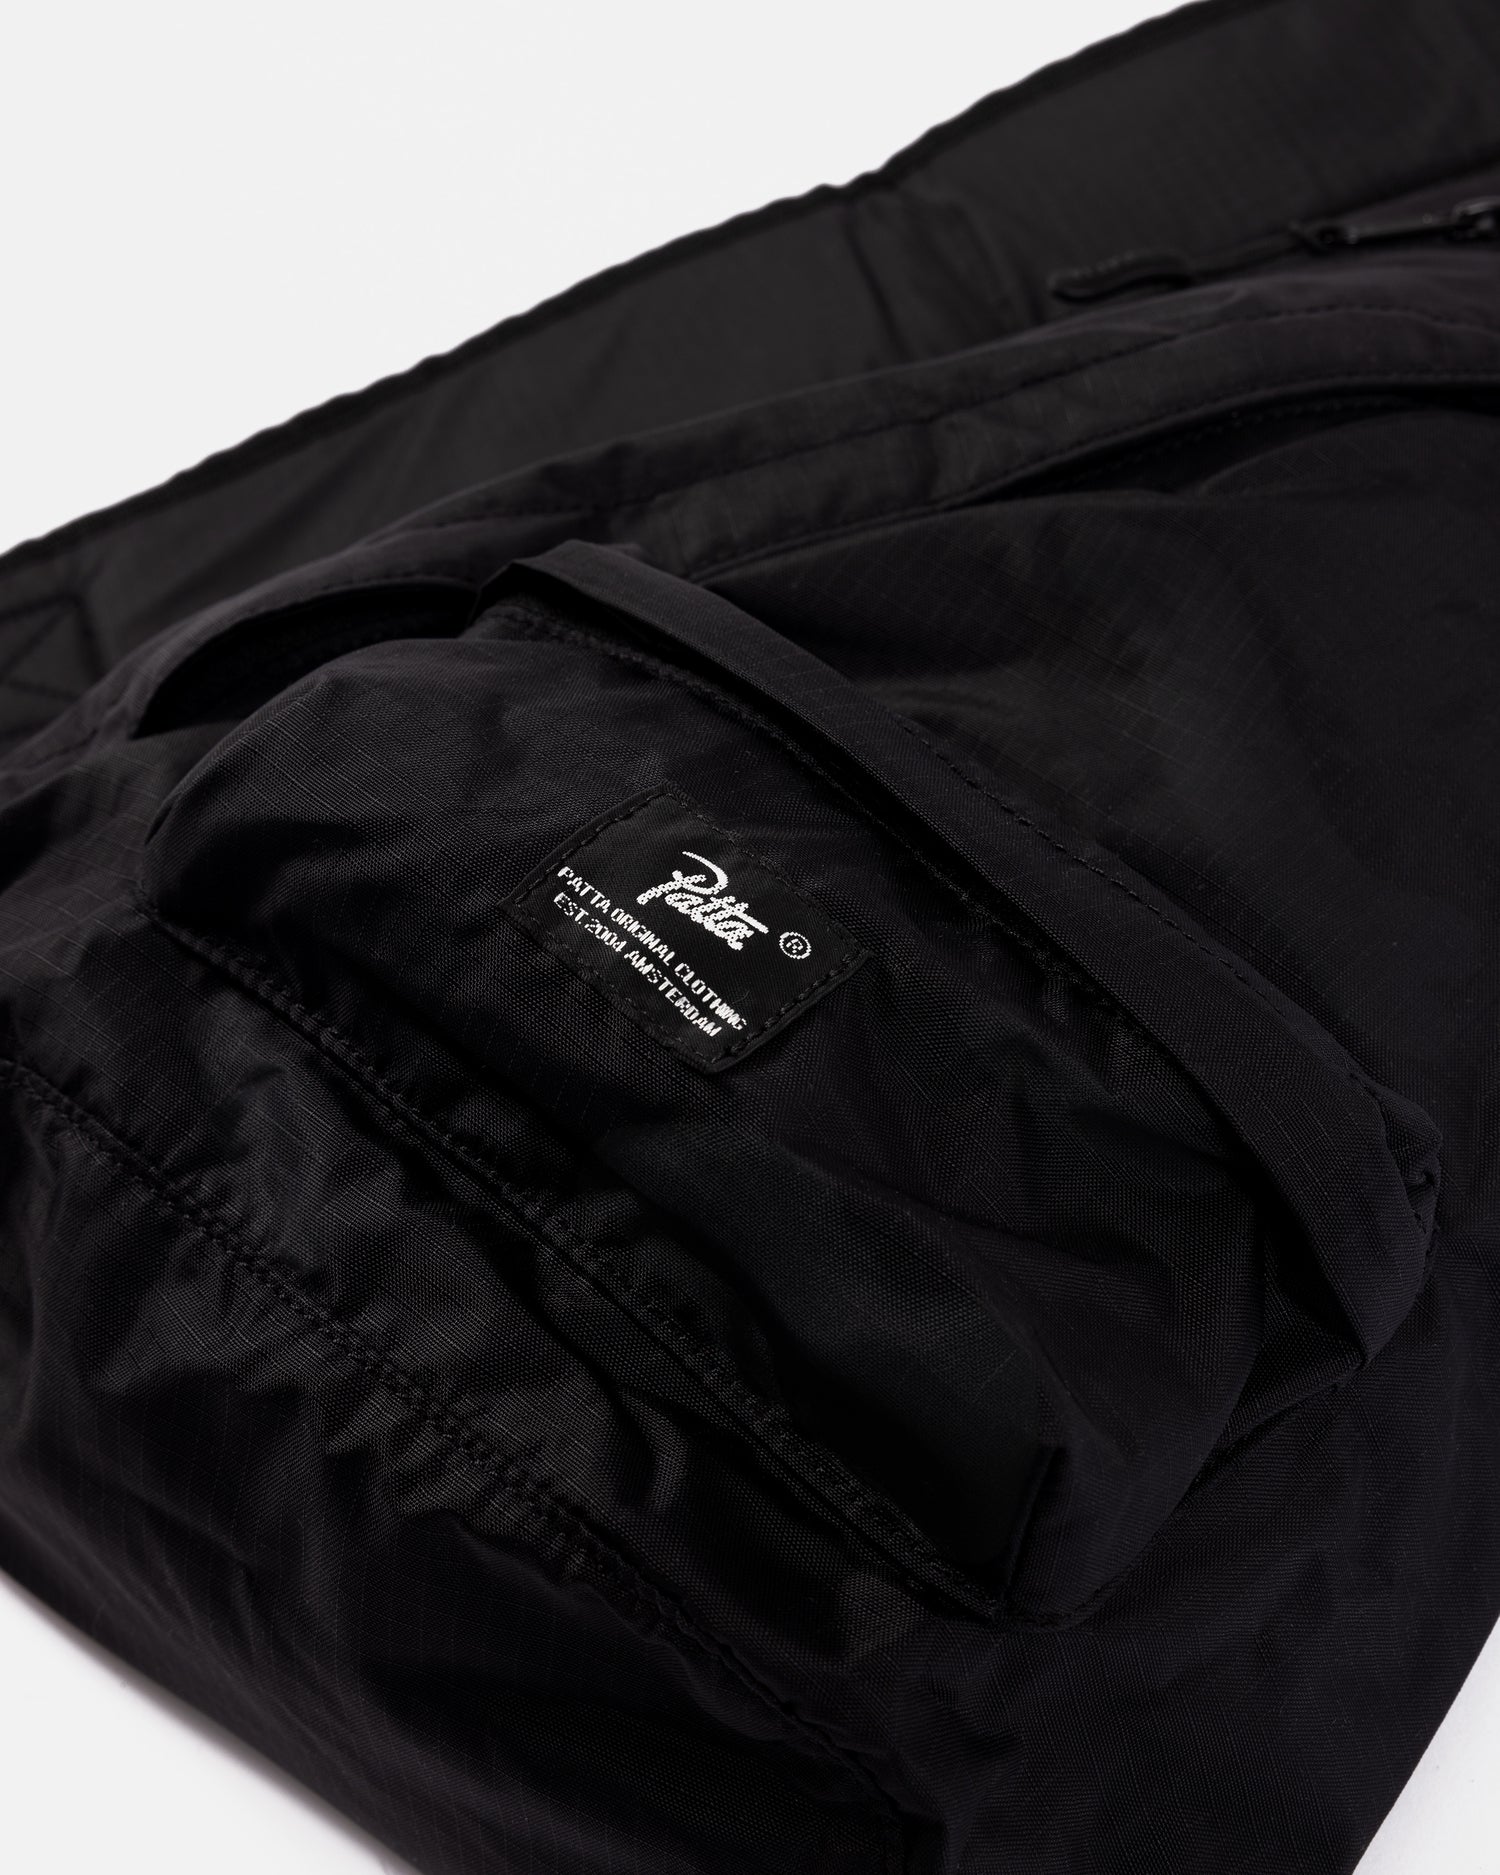 Patta N039 2.0 Sling Bag (Black)